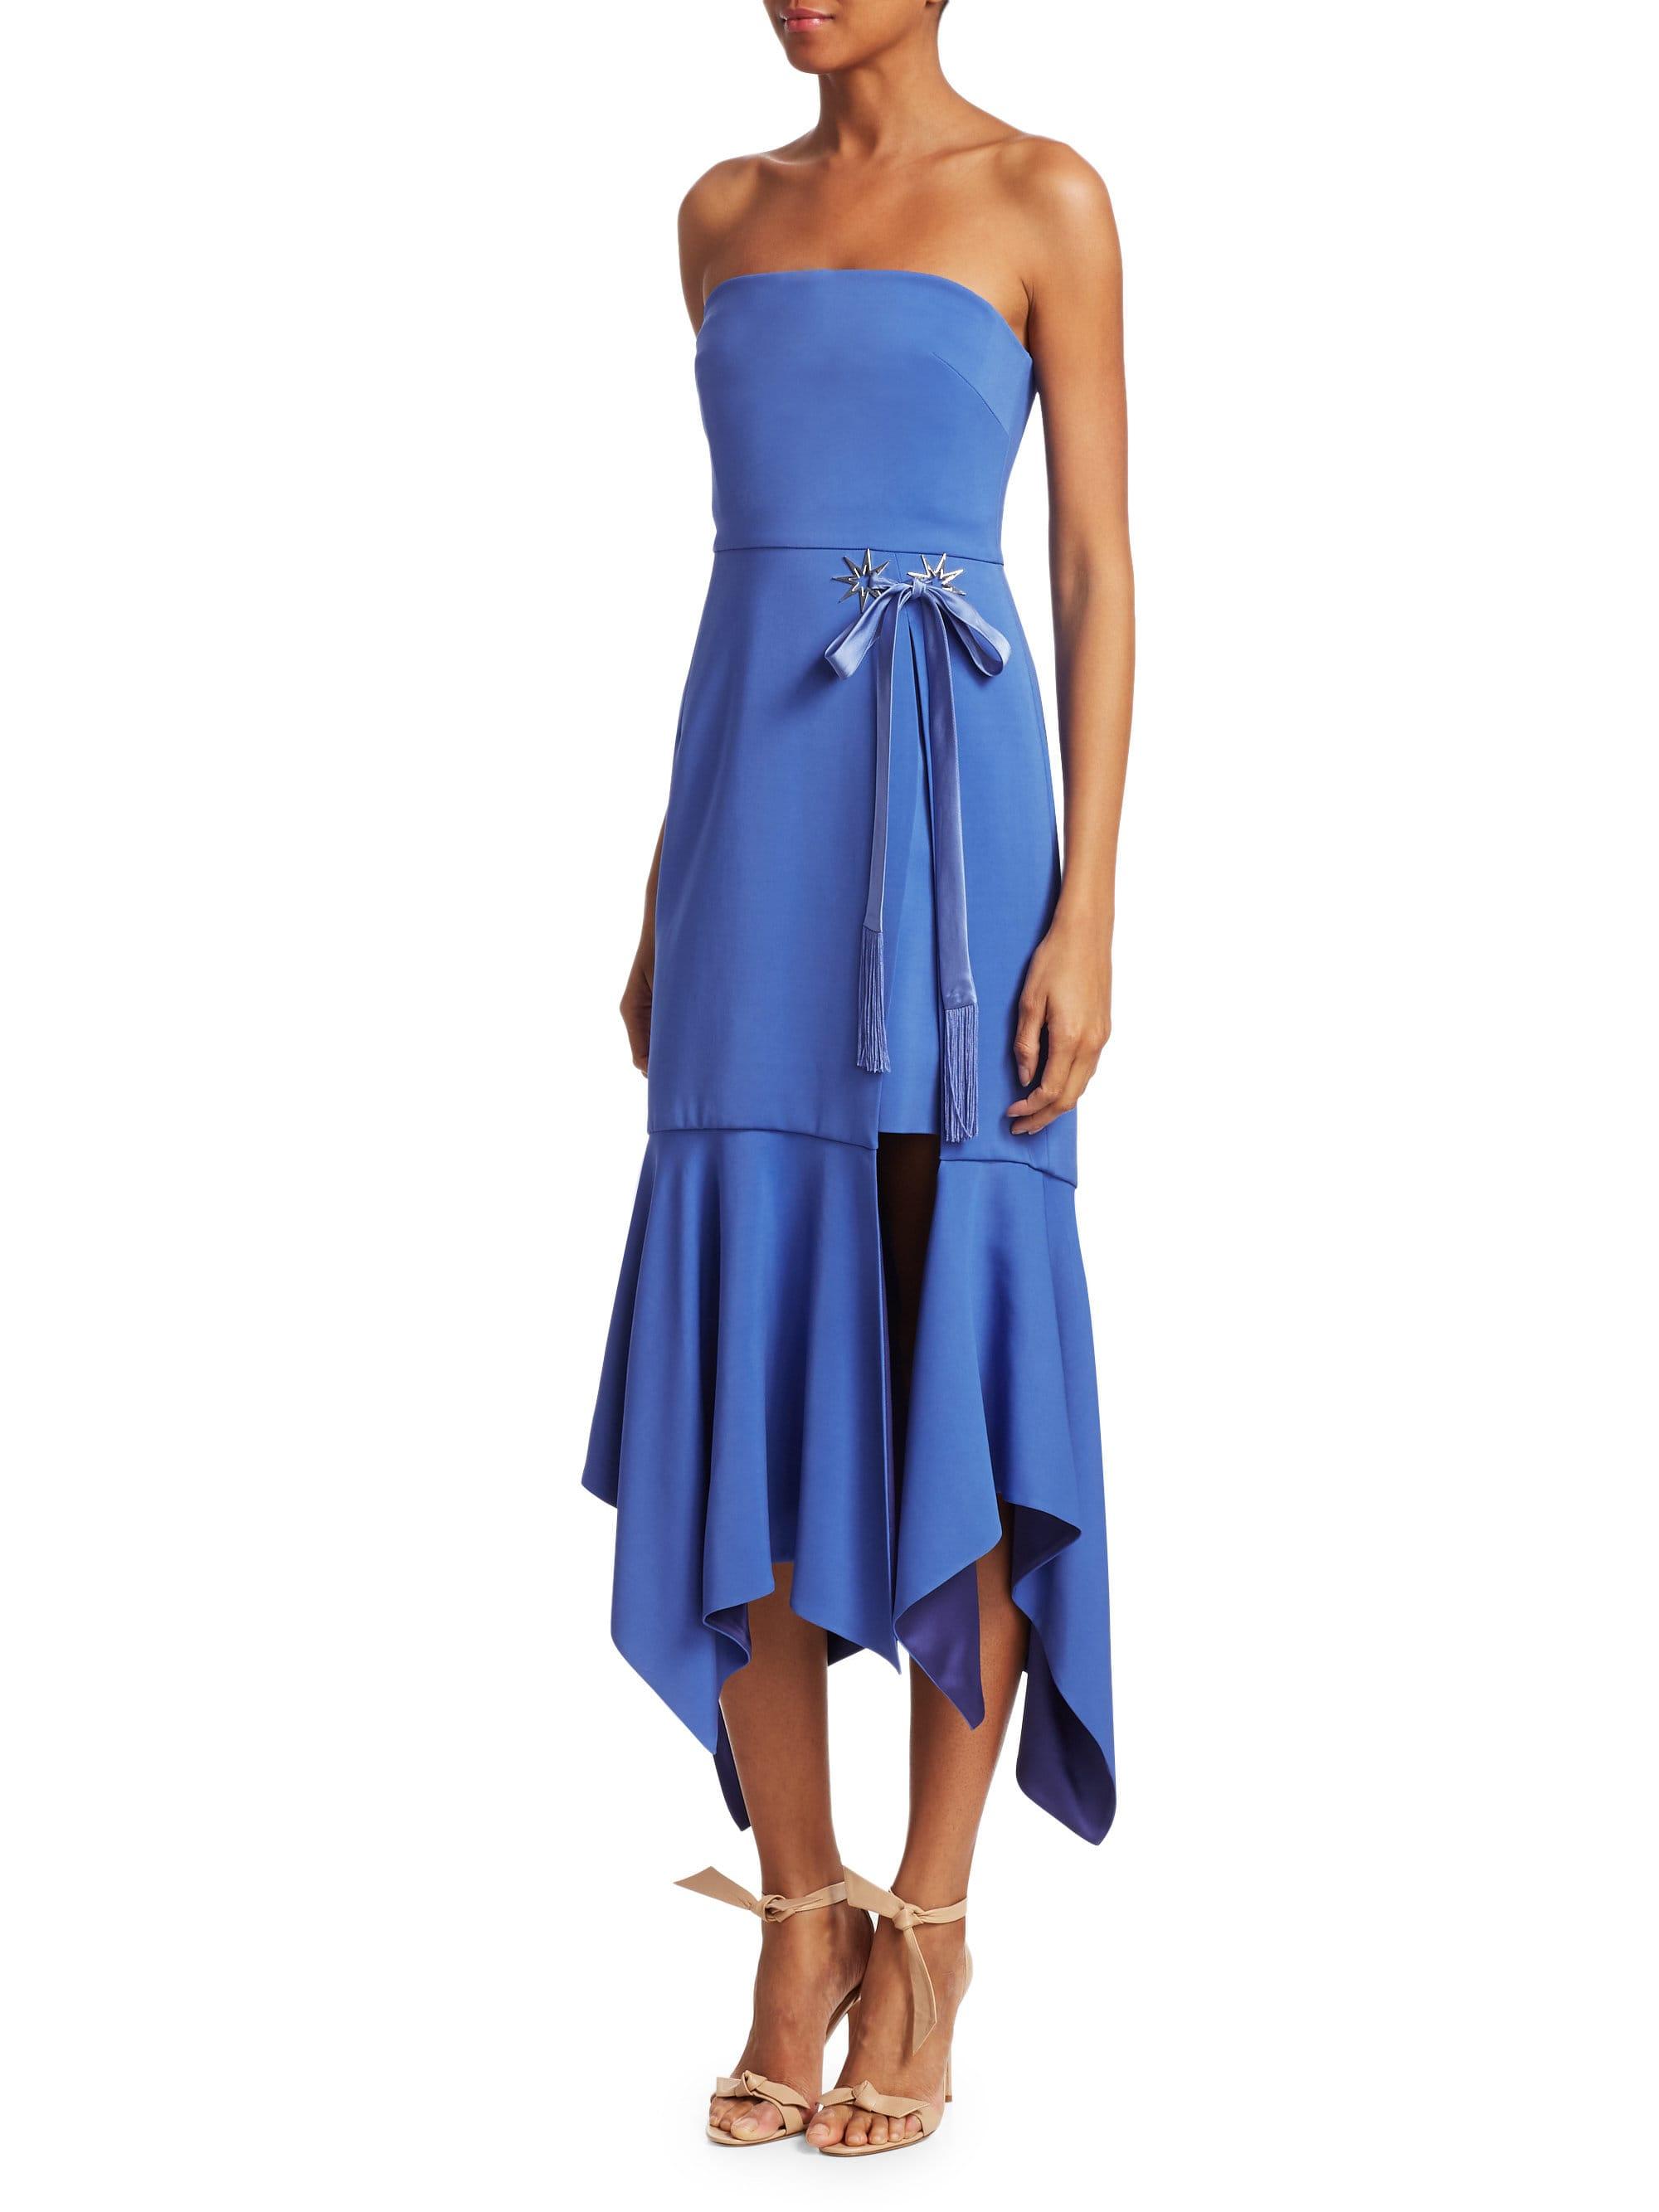 Jonathan Simkhai Star Embellished Crepe Bandeau Dress in Blue - Lyst